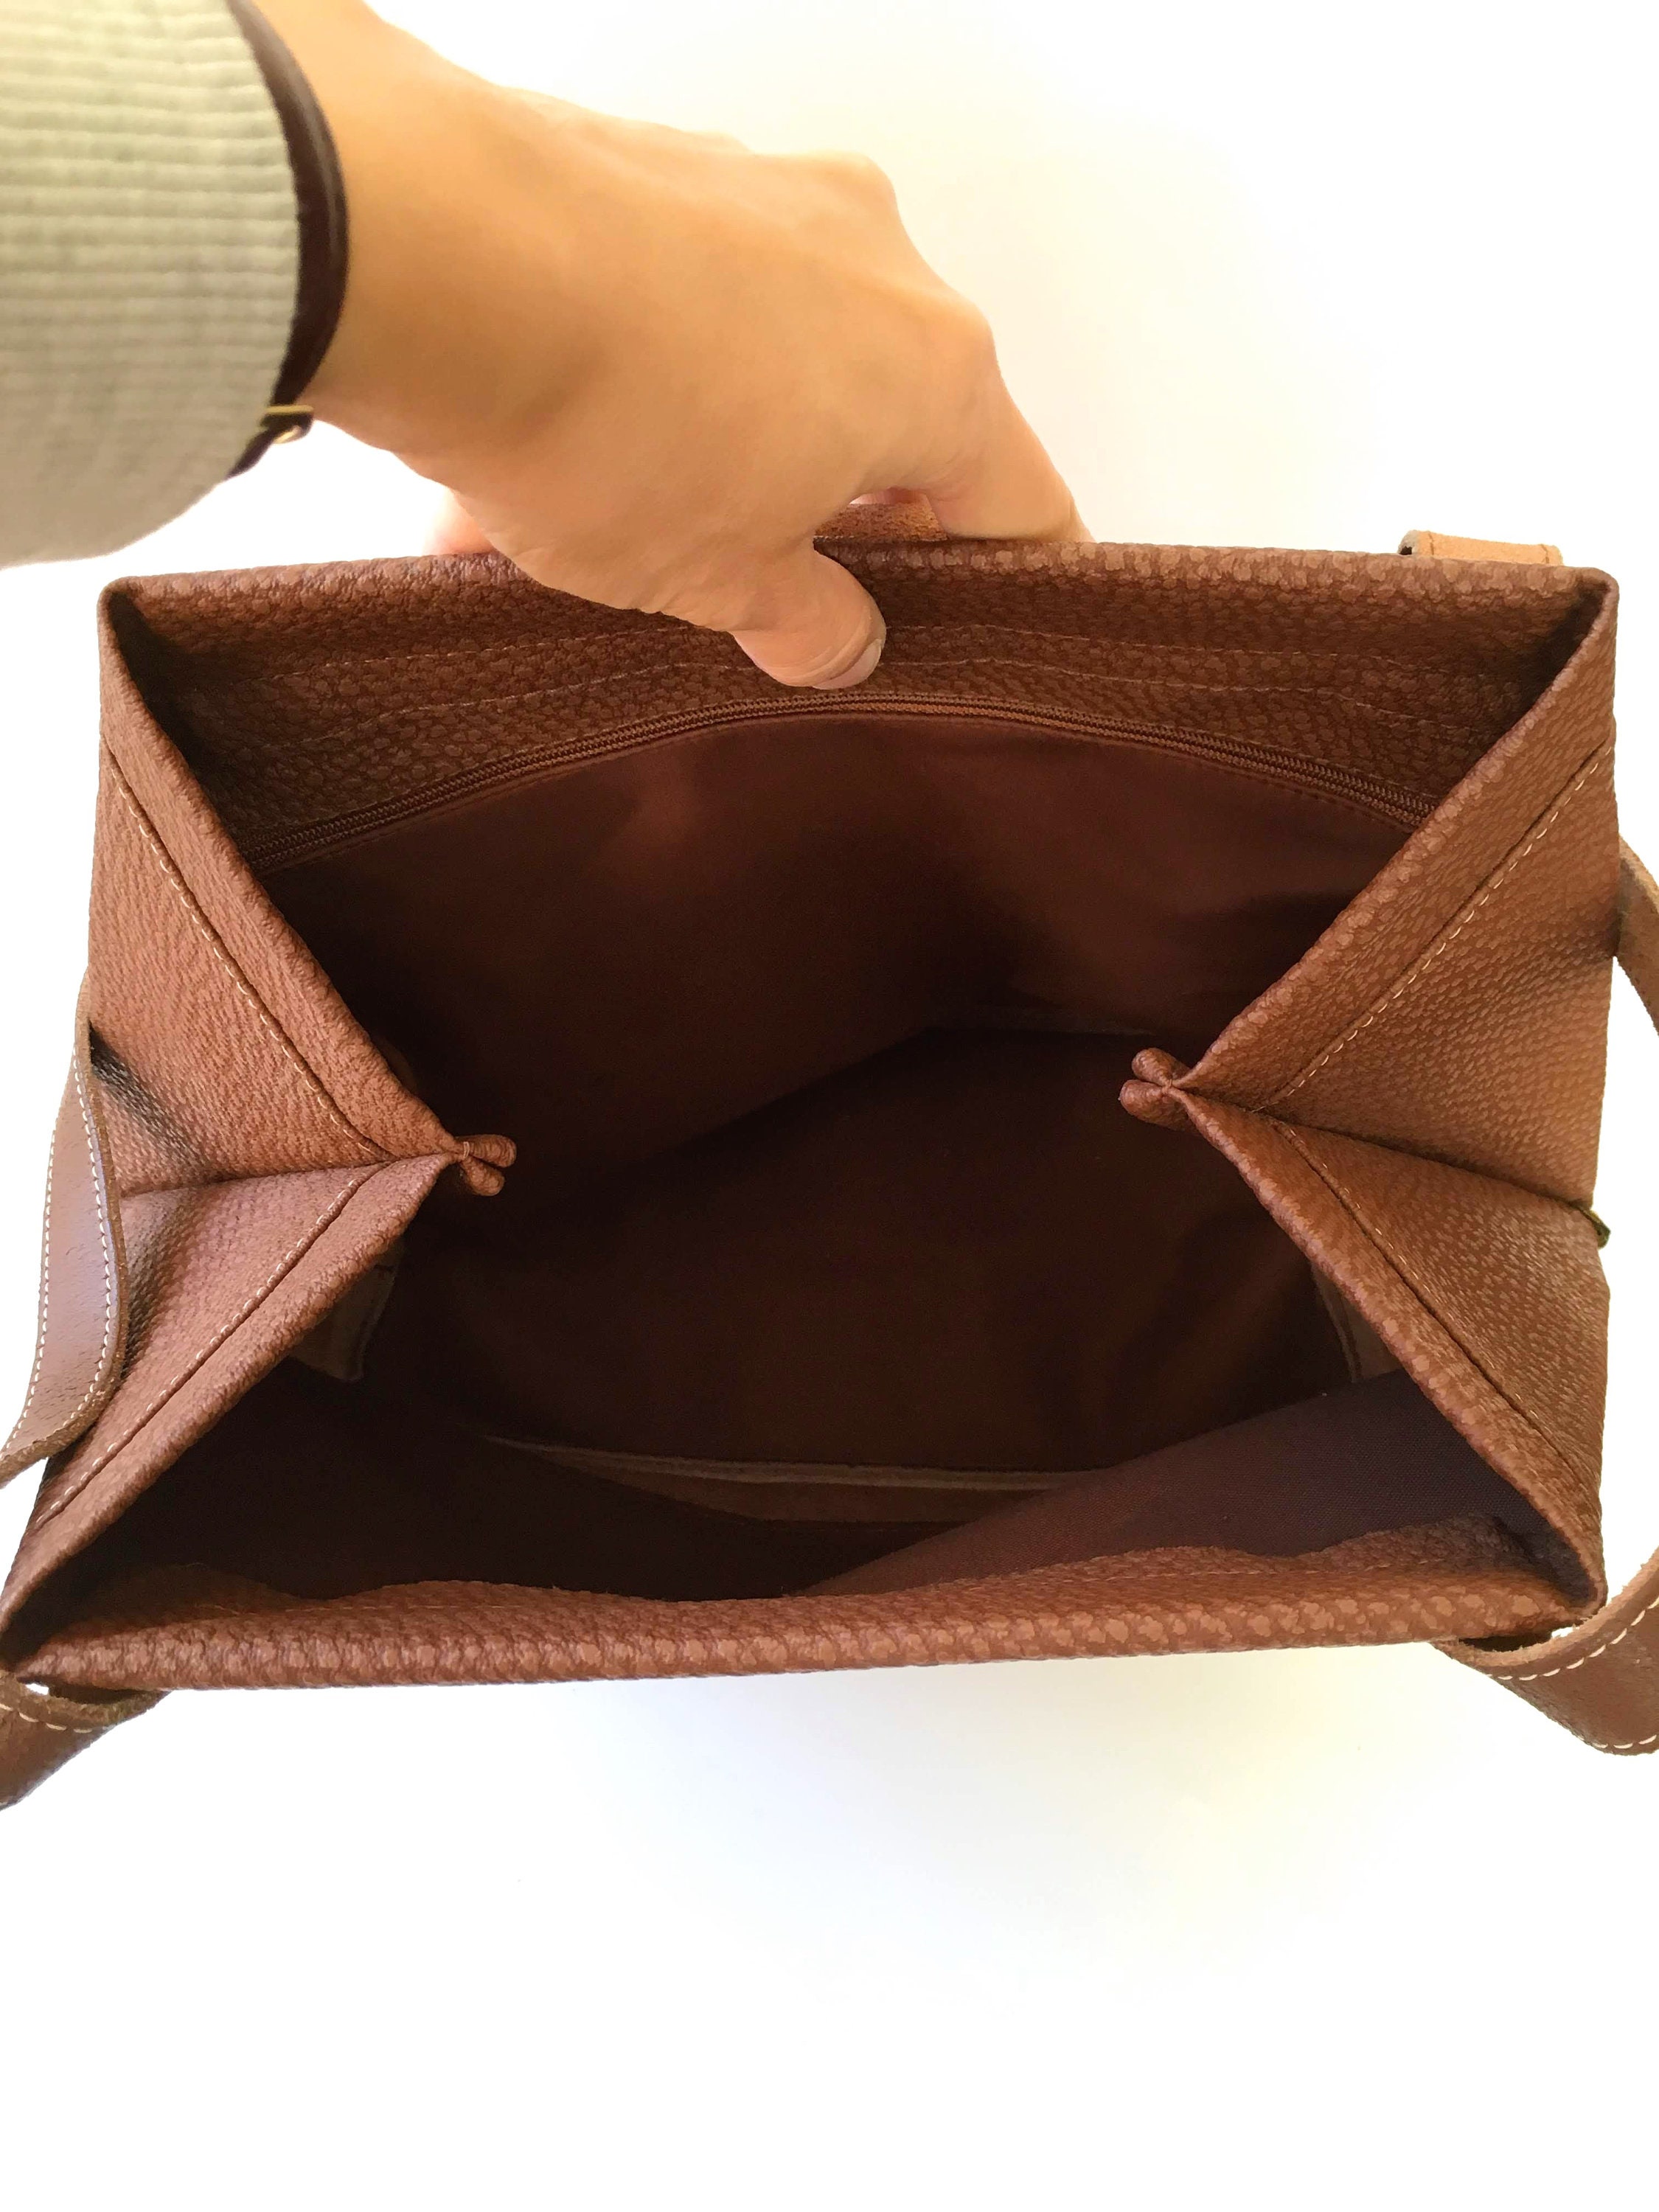 Vintage Paquetage Paris Brown SHoulder Bag Purse